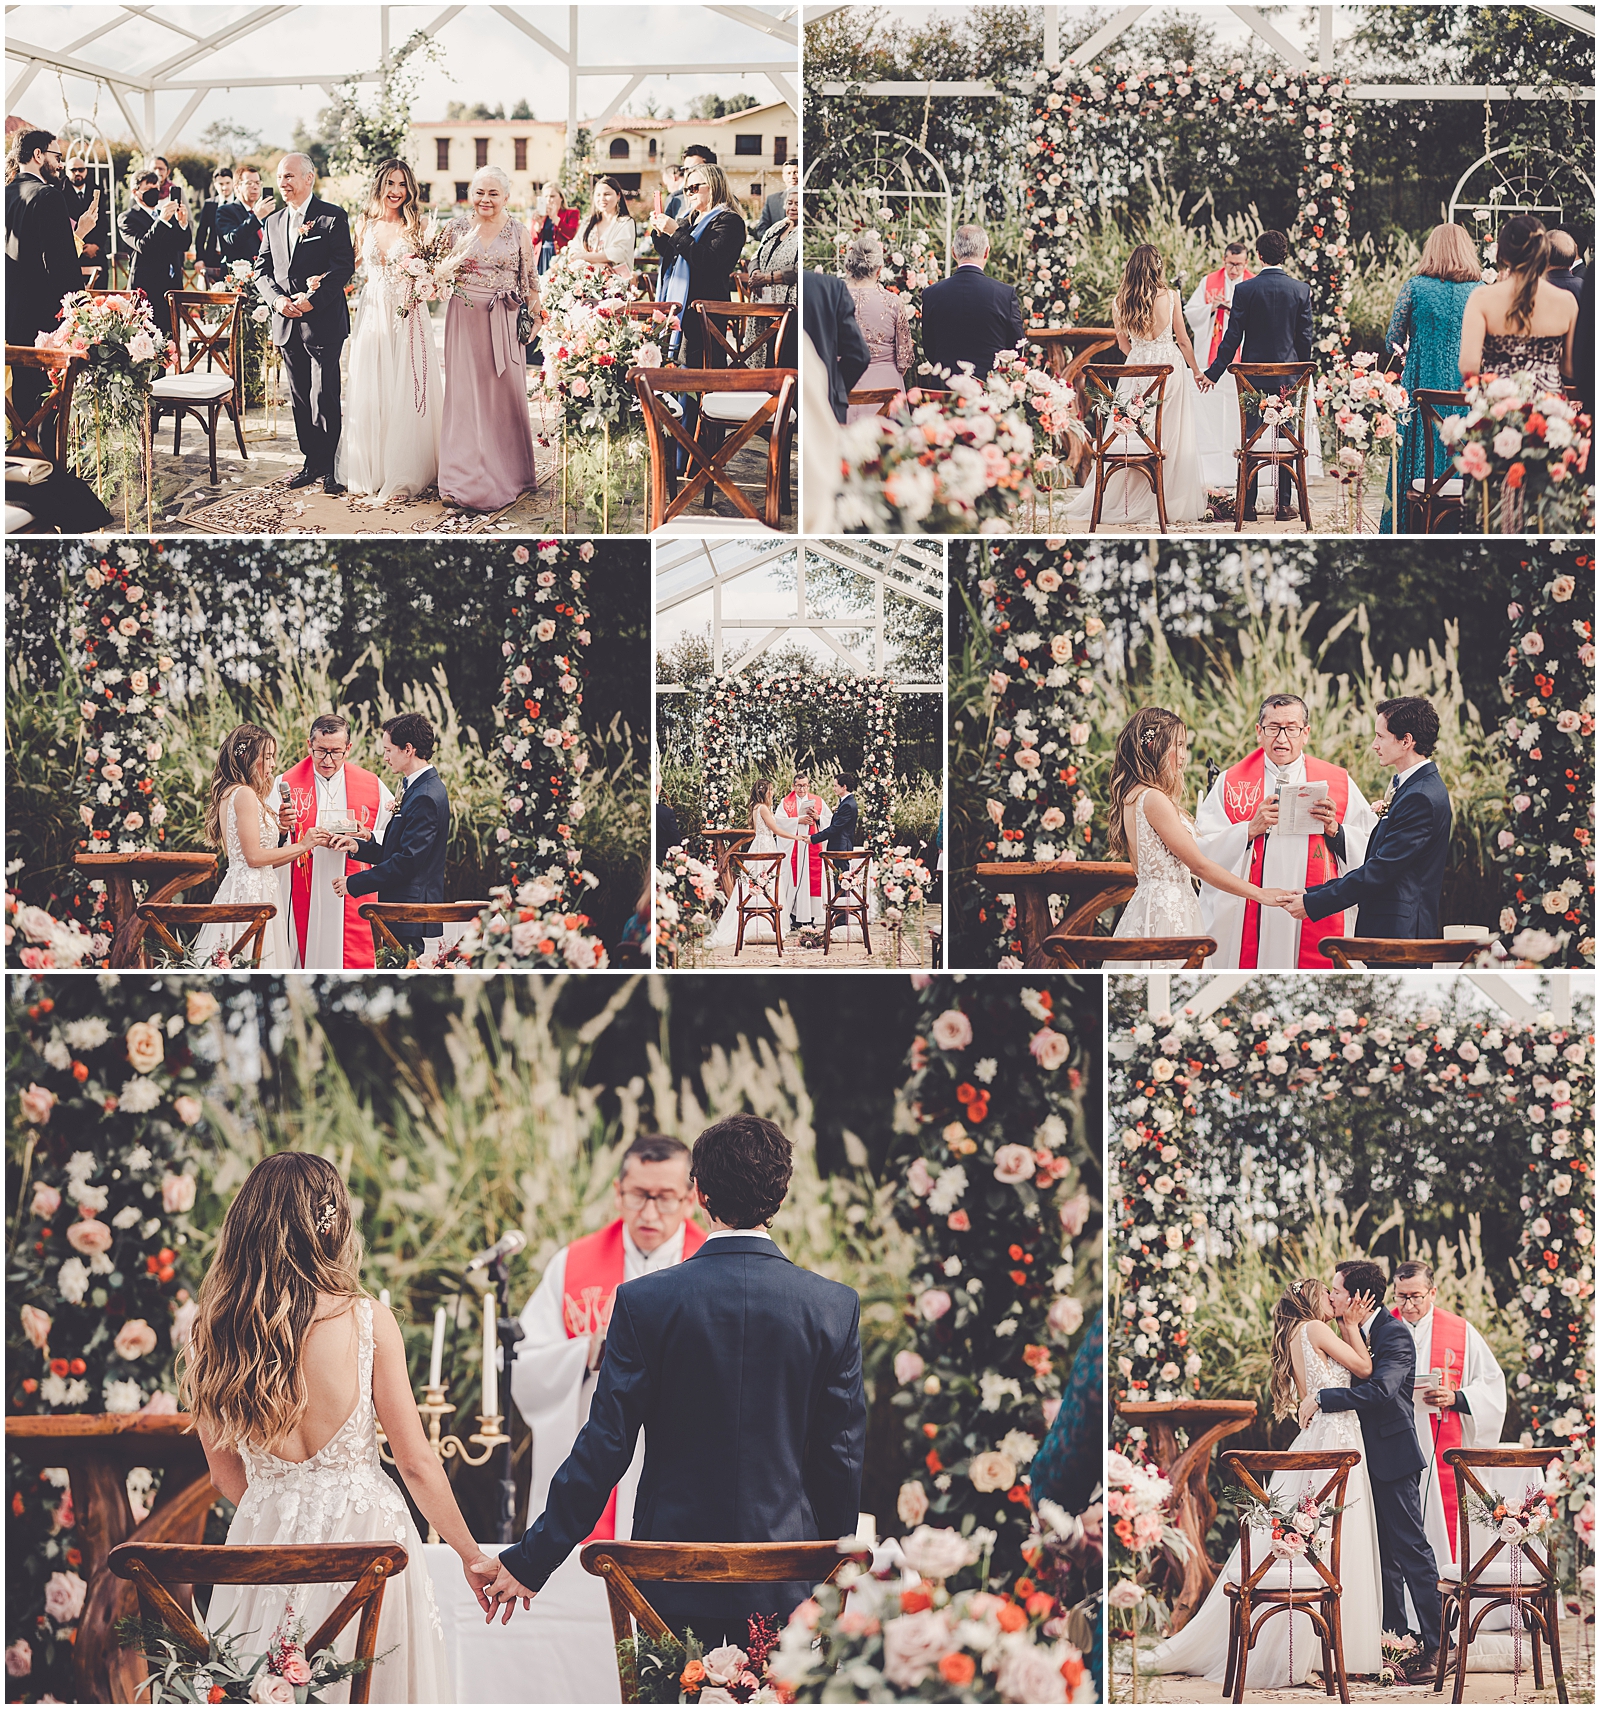 Maria Paula and Mauricio's romantic wedding at Hacienda San Sebastian Rosal in Colombia with Chicago photographer Kara Evans Photographer.